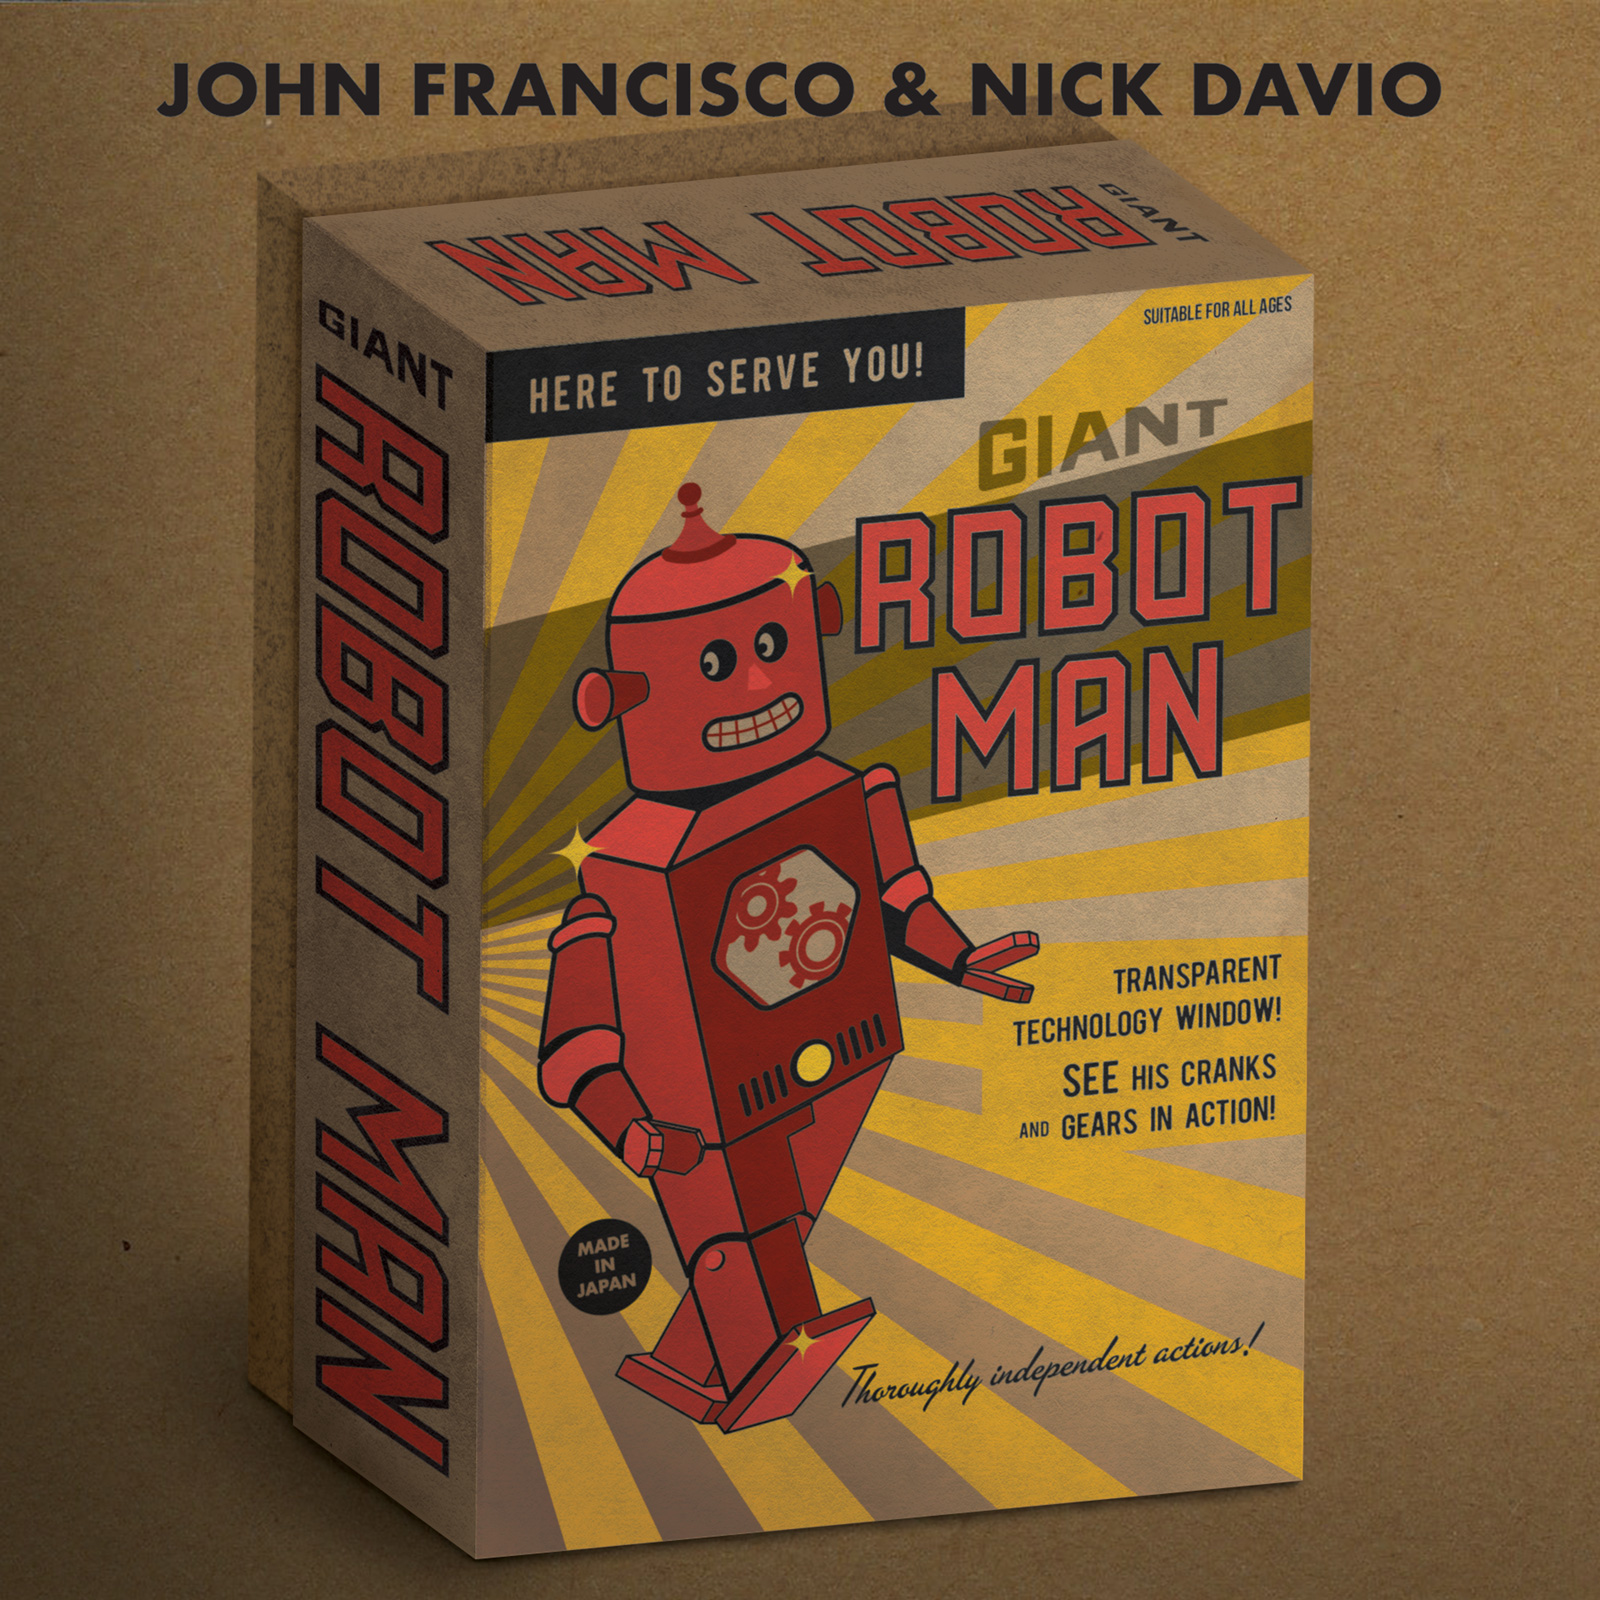 John Francisco & Nick Davio's song Giant Robot Man